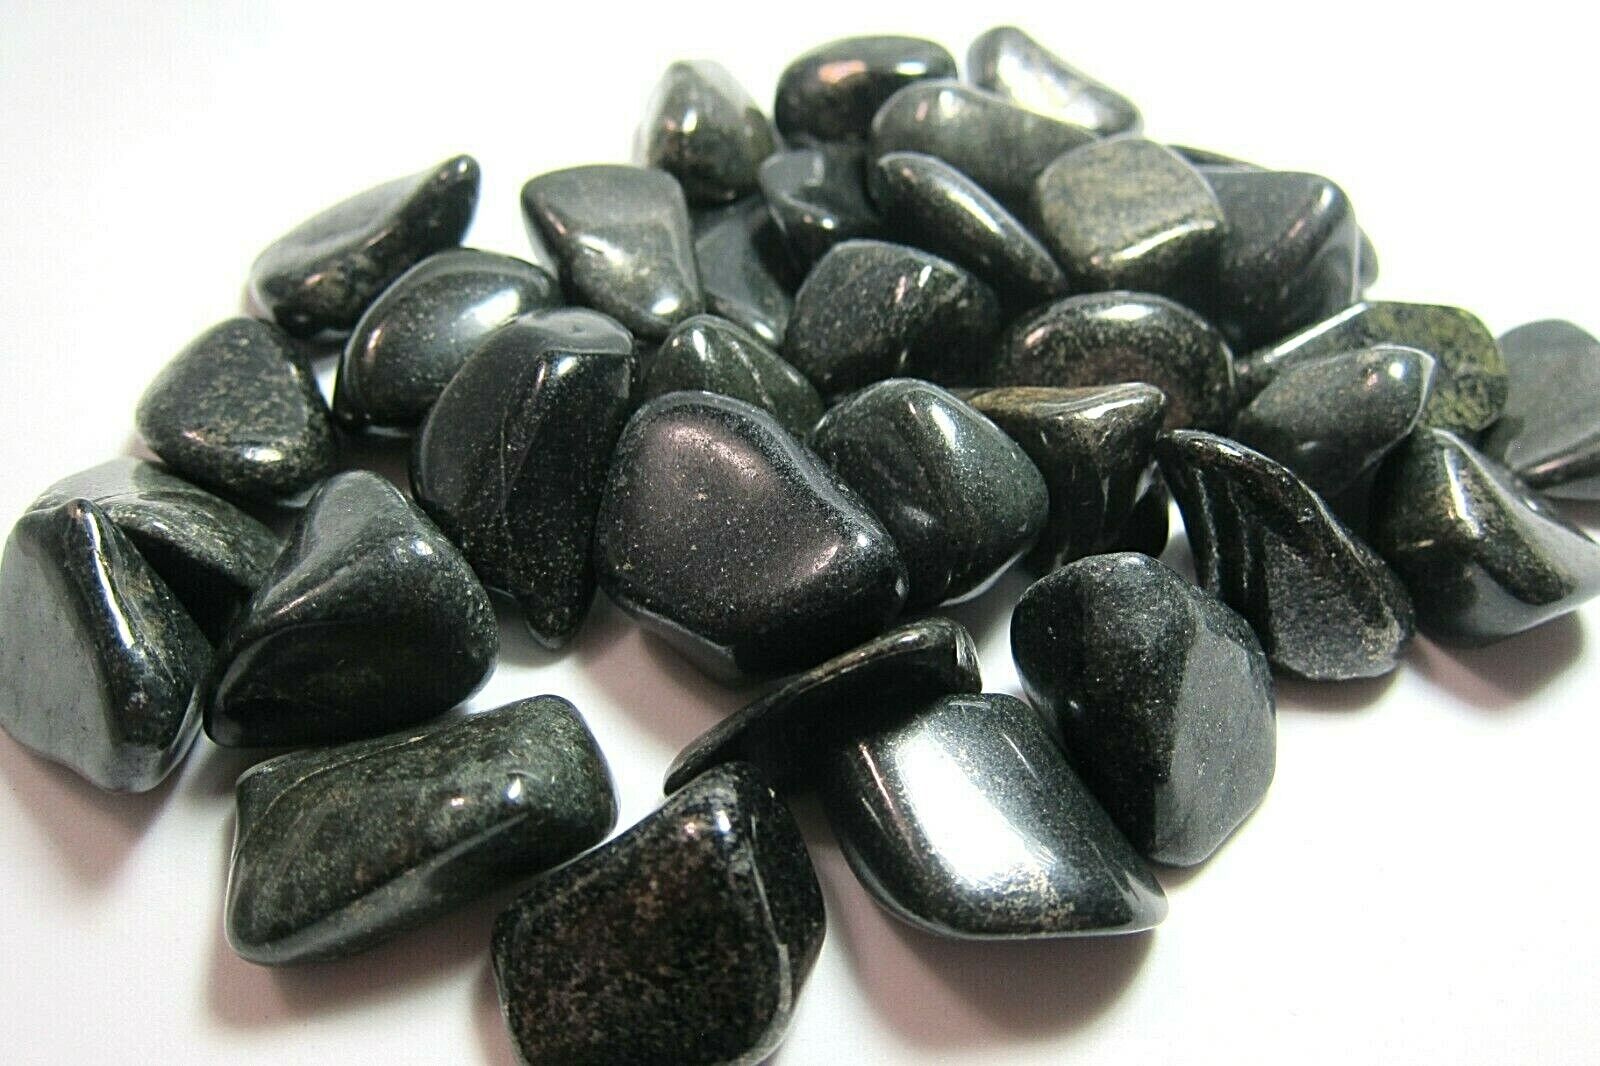 1x Black Lemurian Jade Tumbled Stones 30-40mm Reiki Healing Crystal Past Abuse 